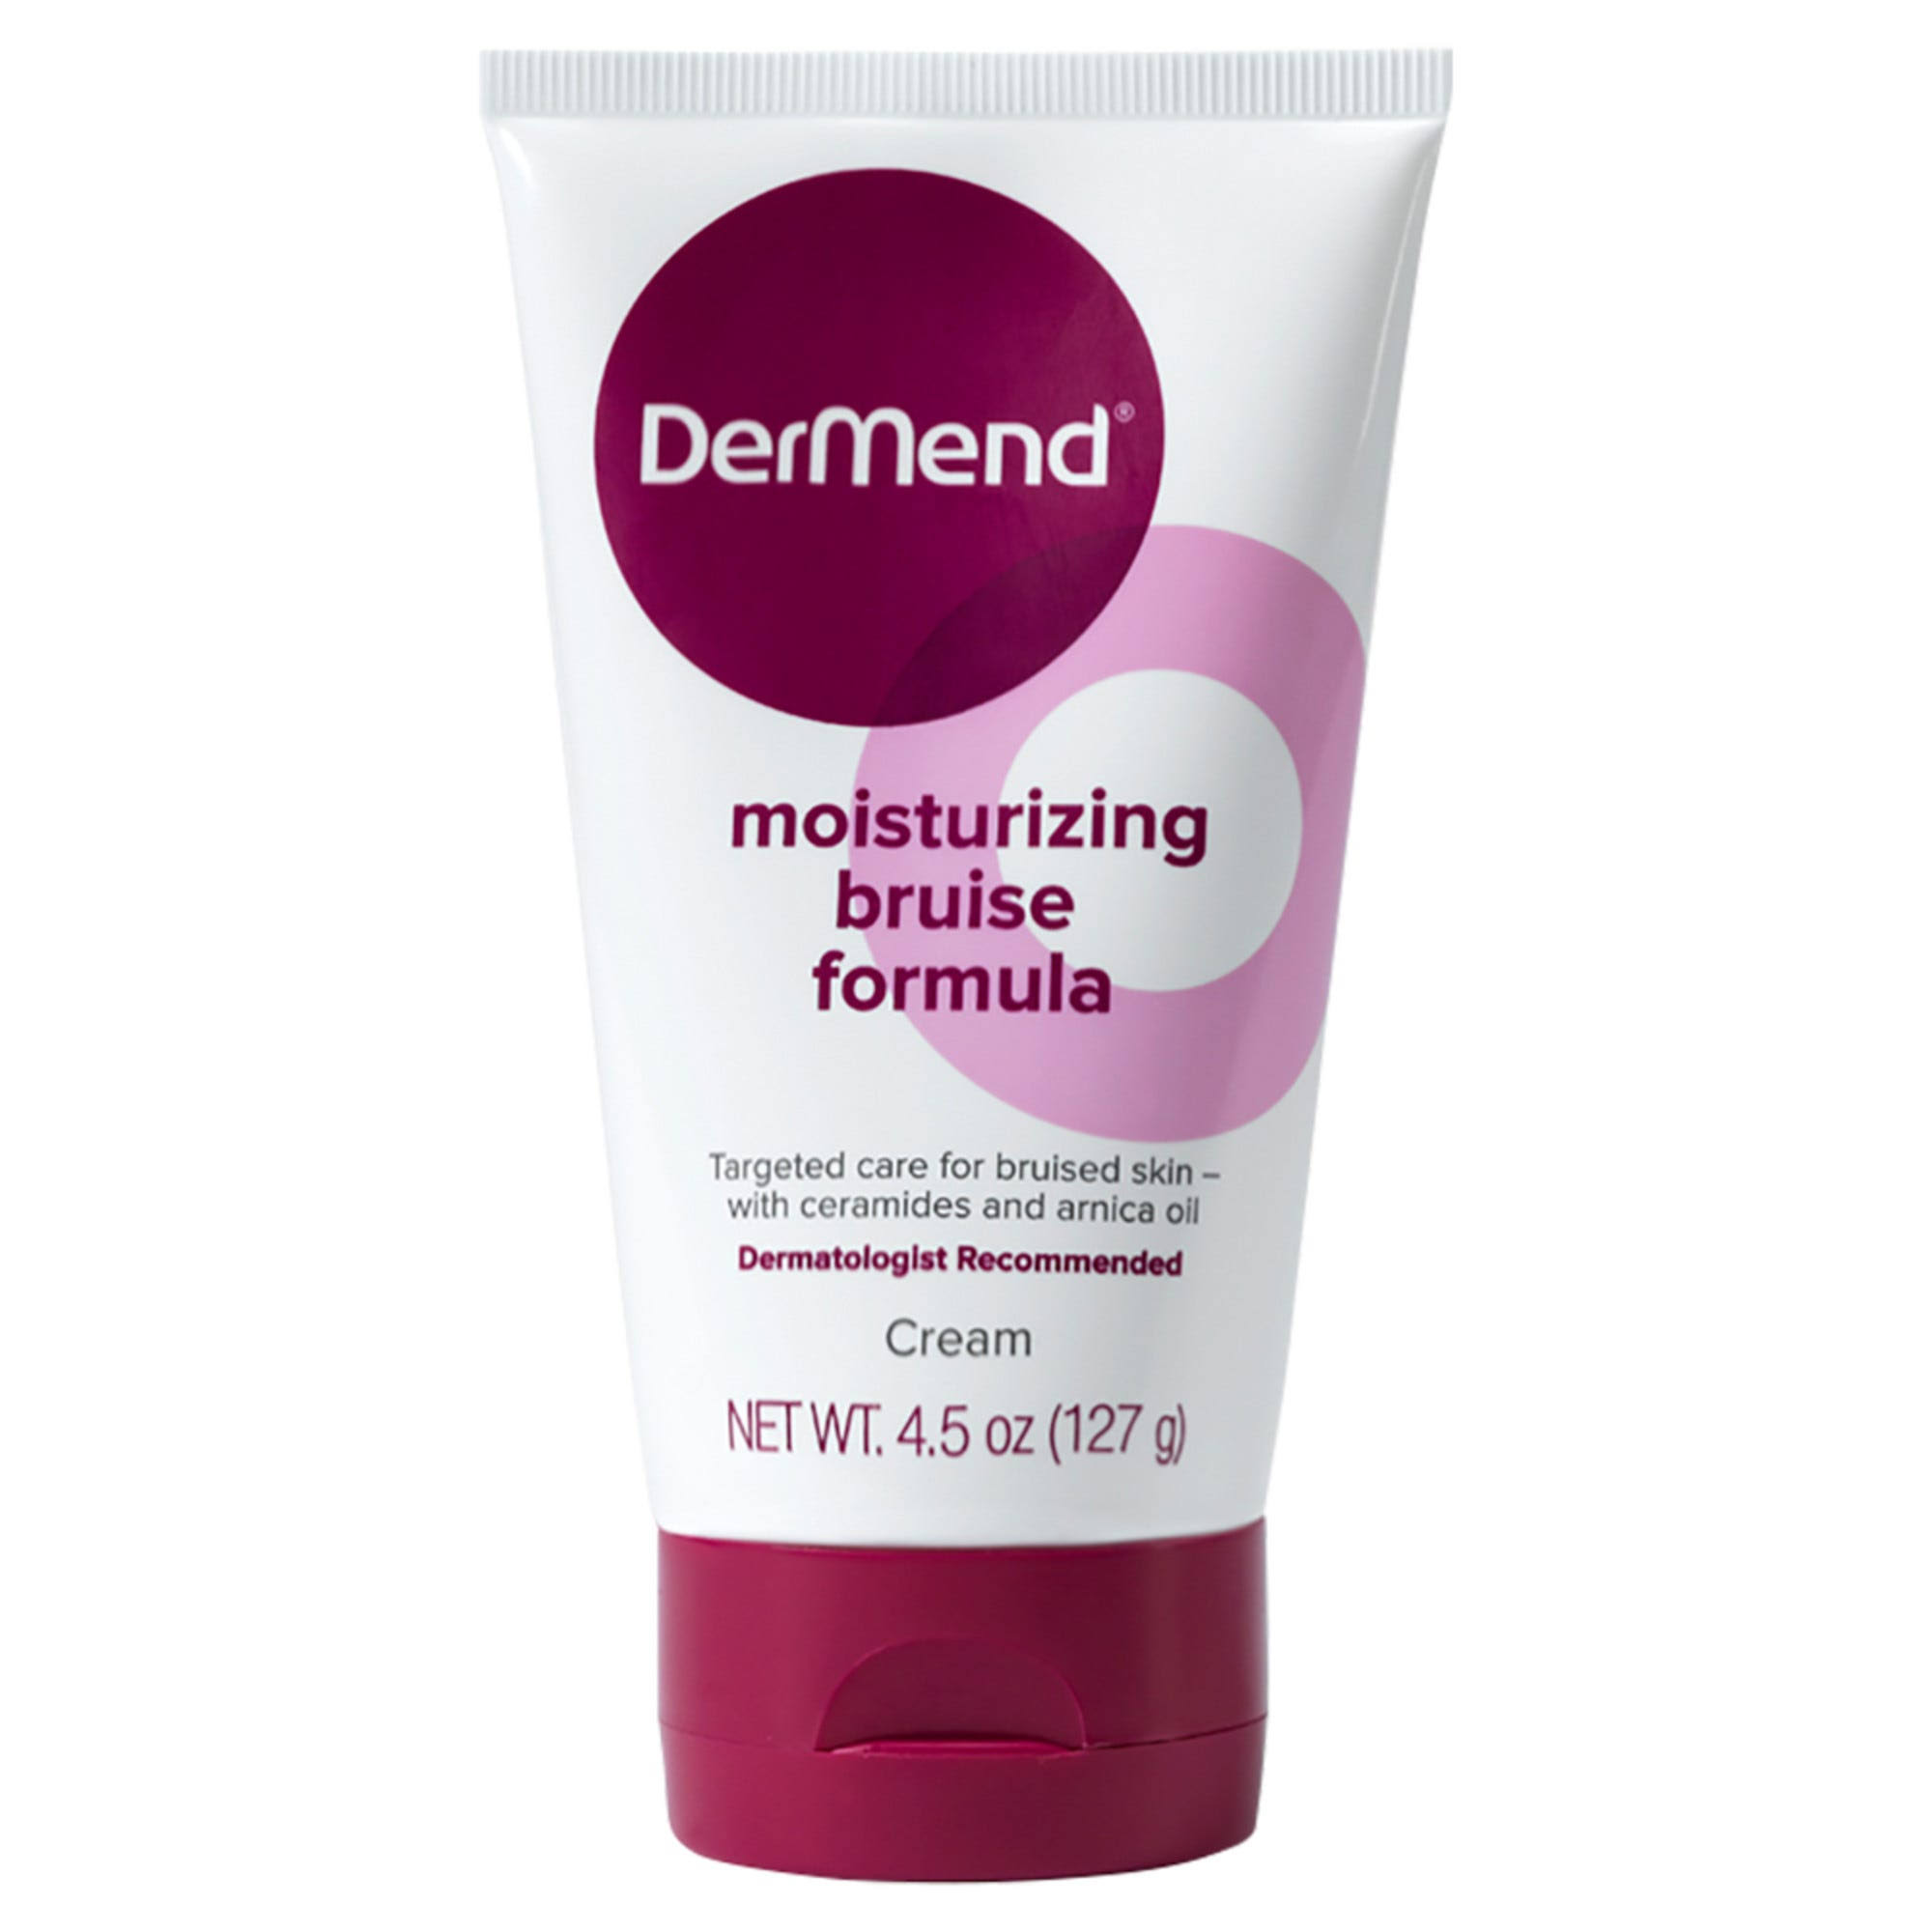 DerMend Moisturizing Bruise Formula Cream - 4.5oz